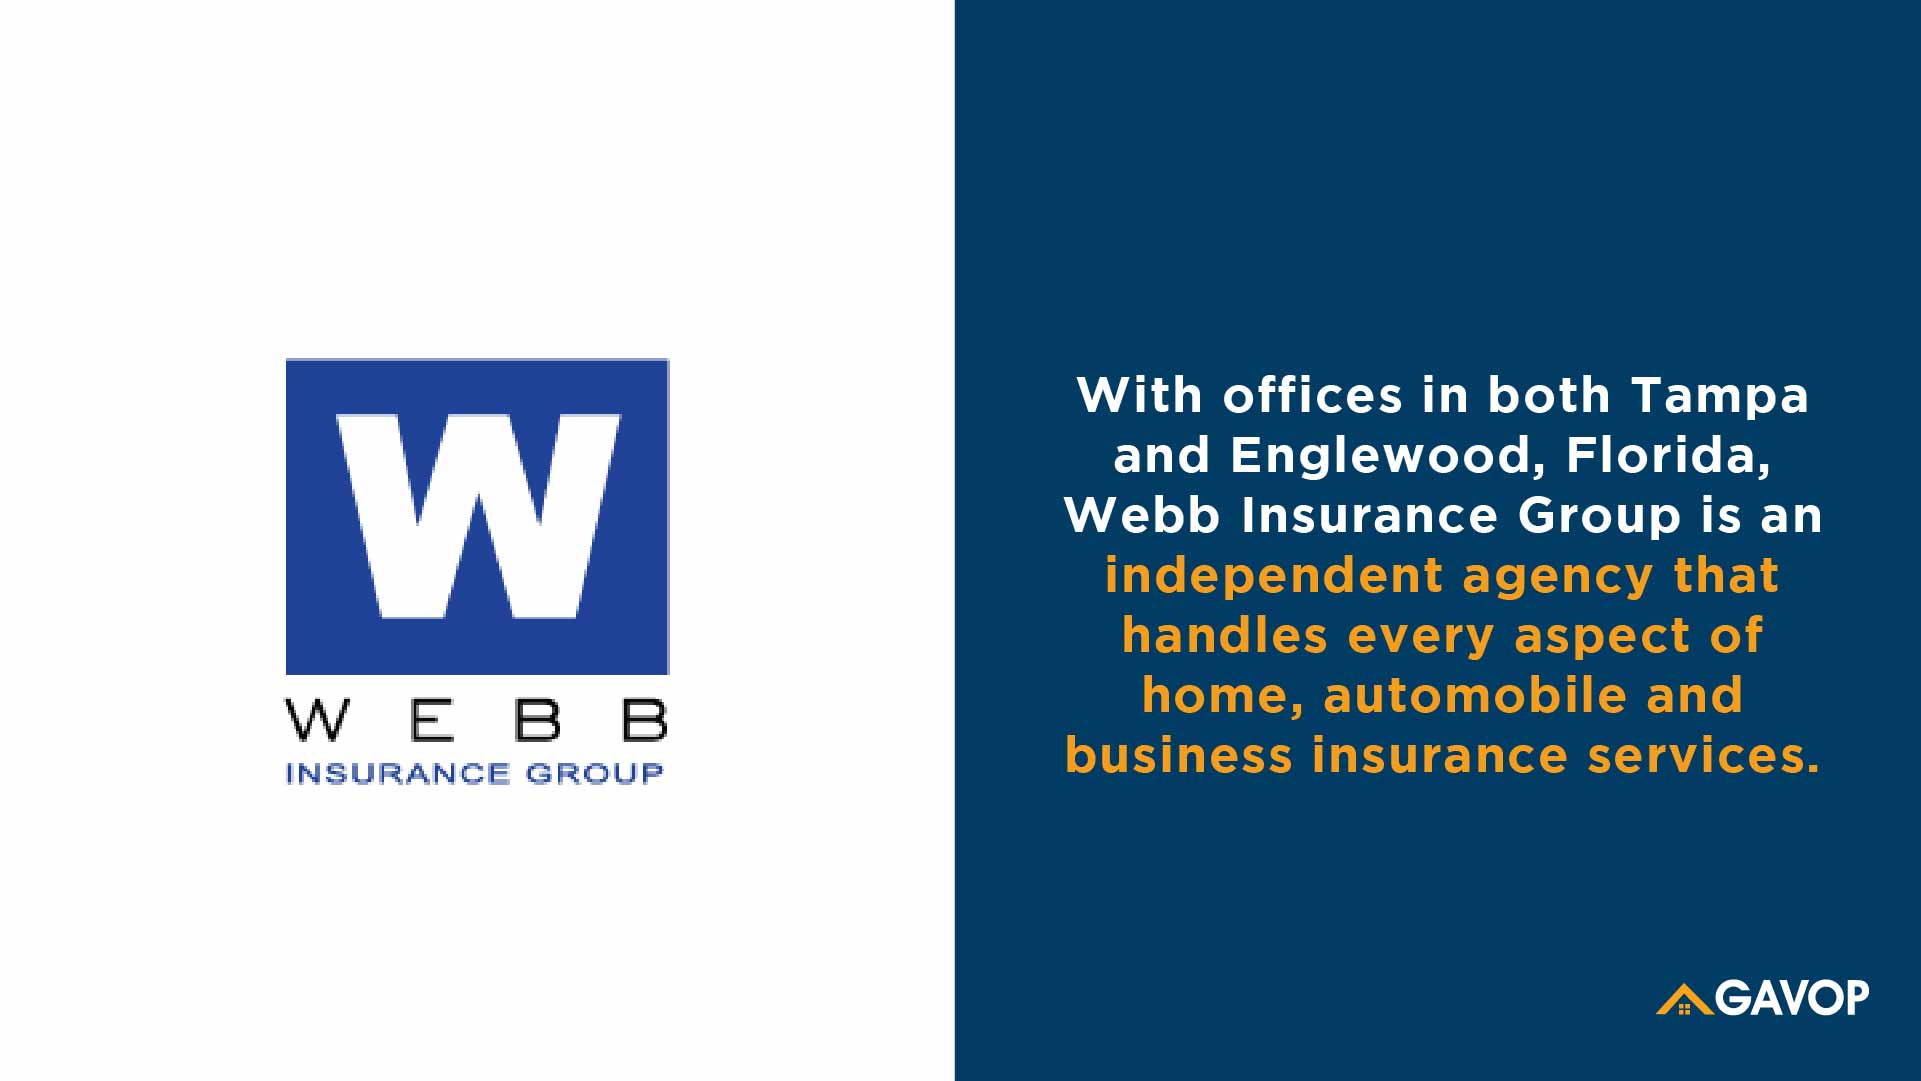 Webb Insurance Group